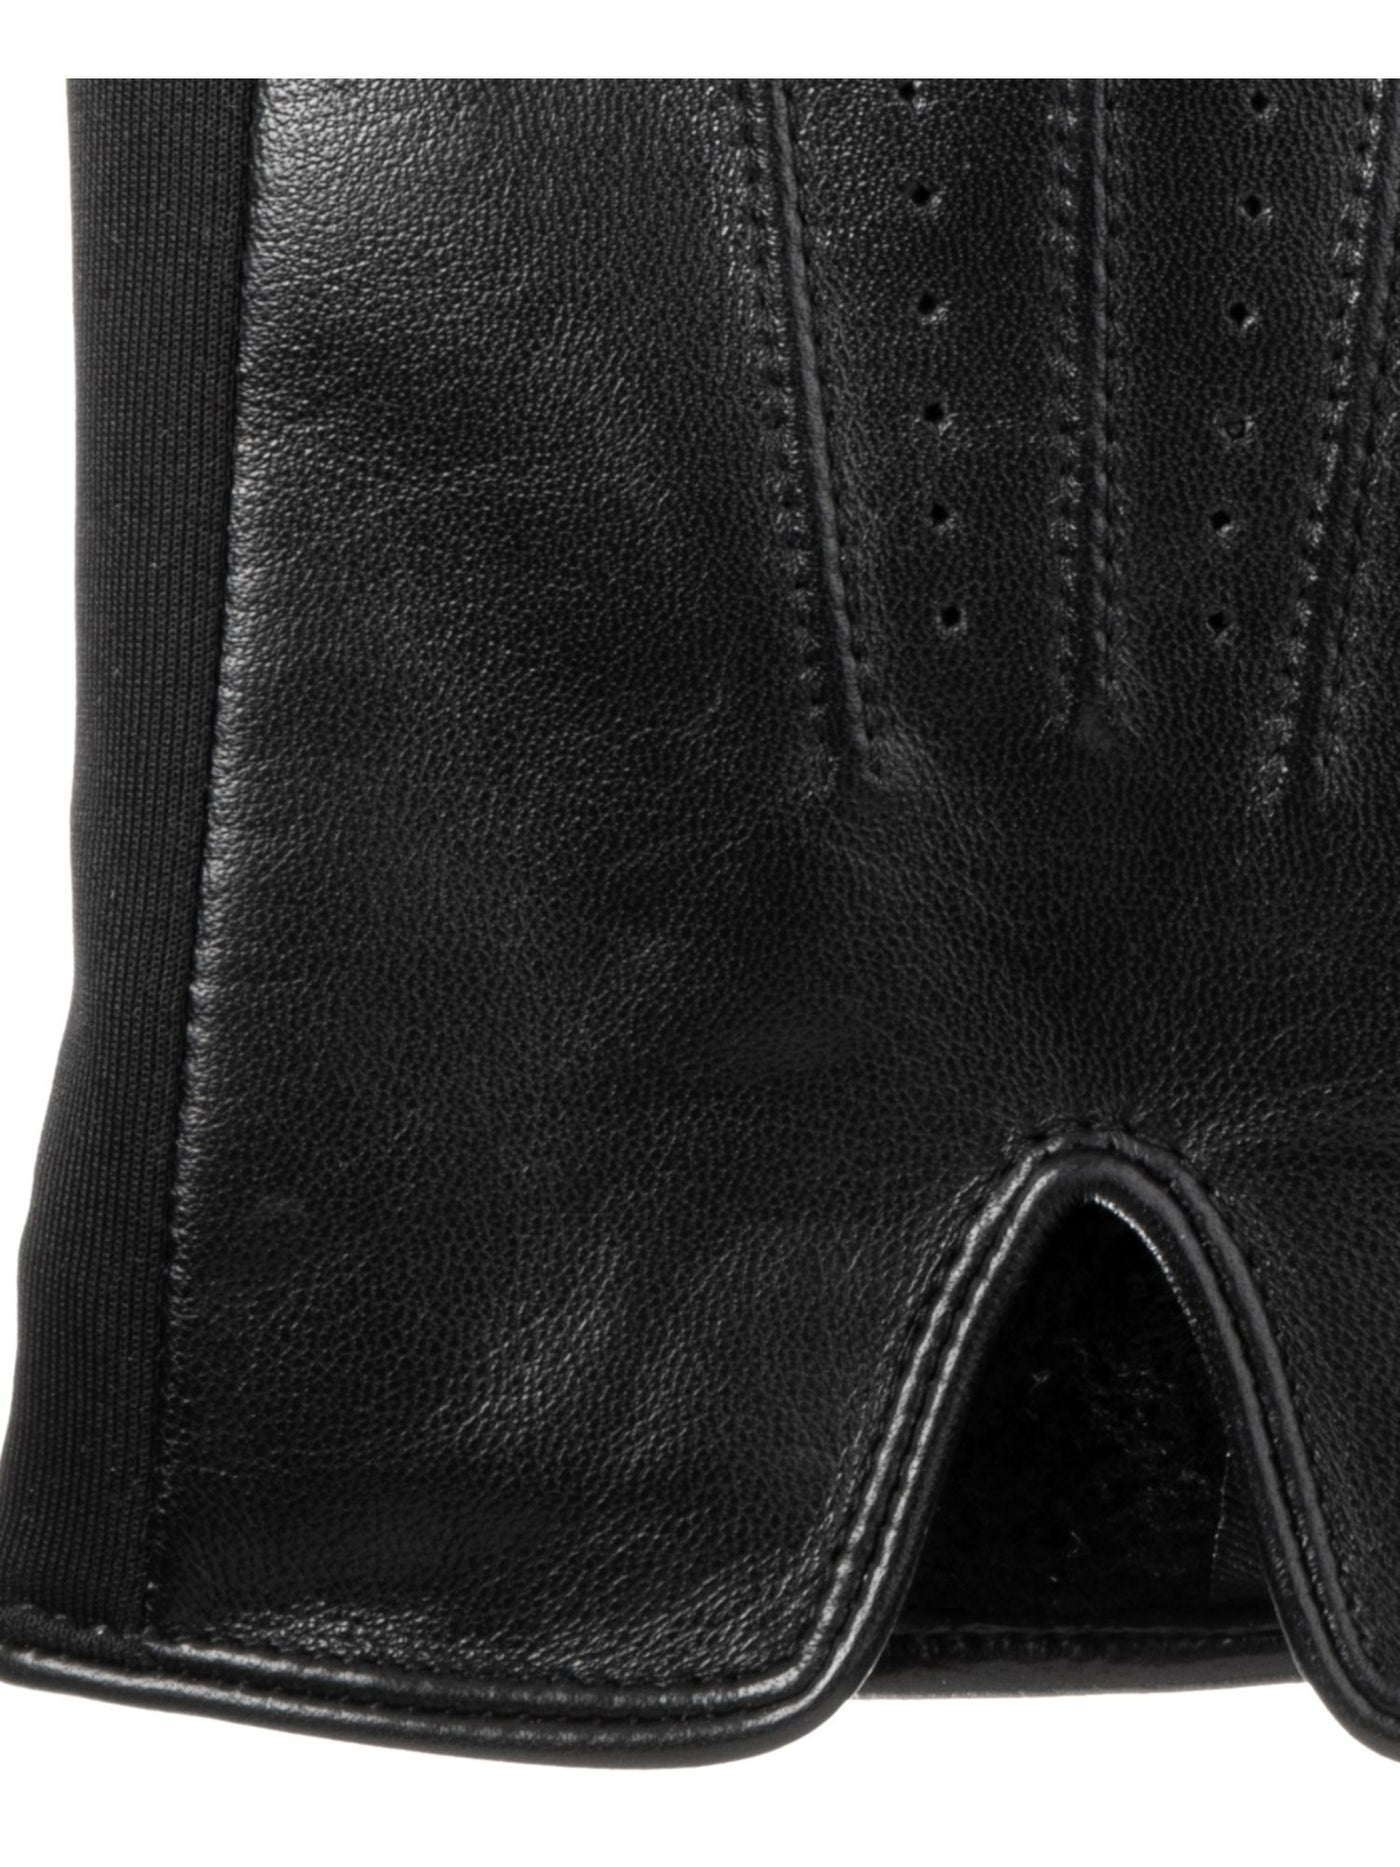 Isotoner Mens Black Leather Slip On Stretch Winter Cold Weather Gloves M